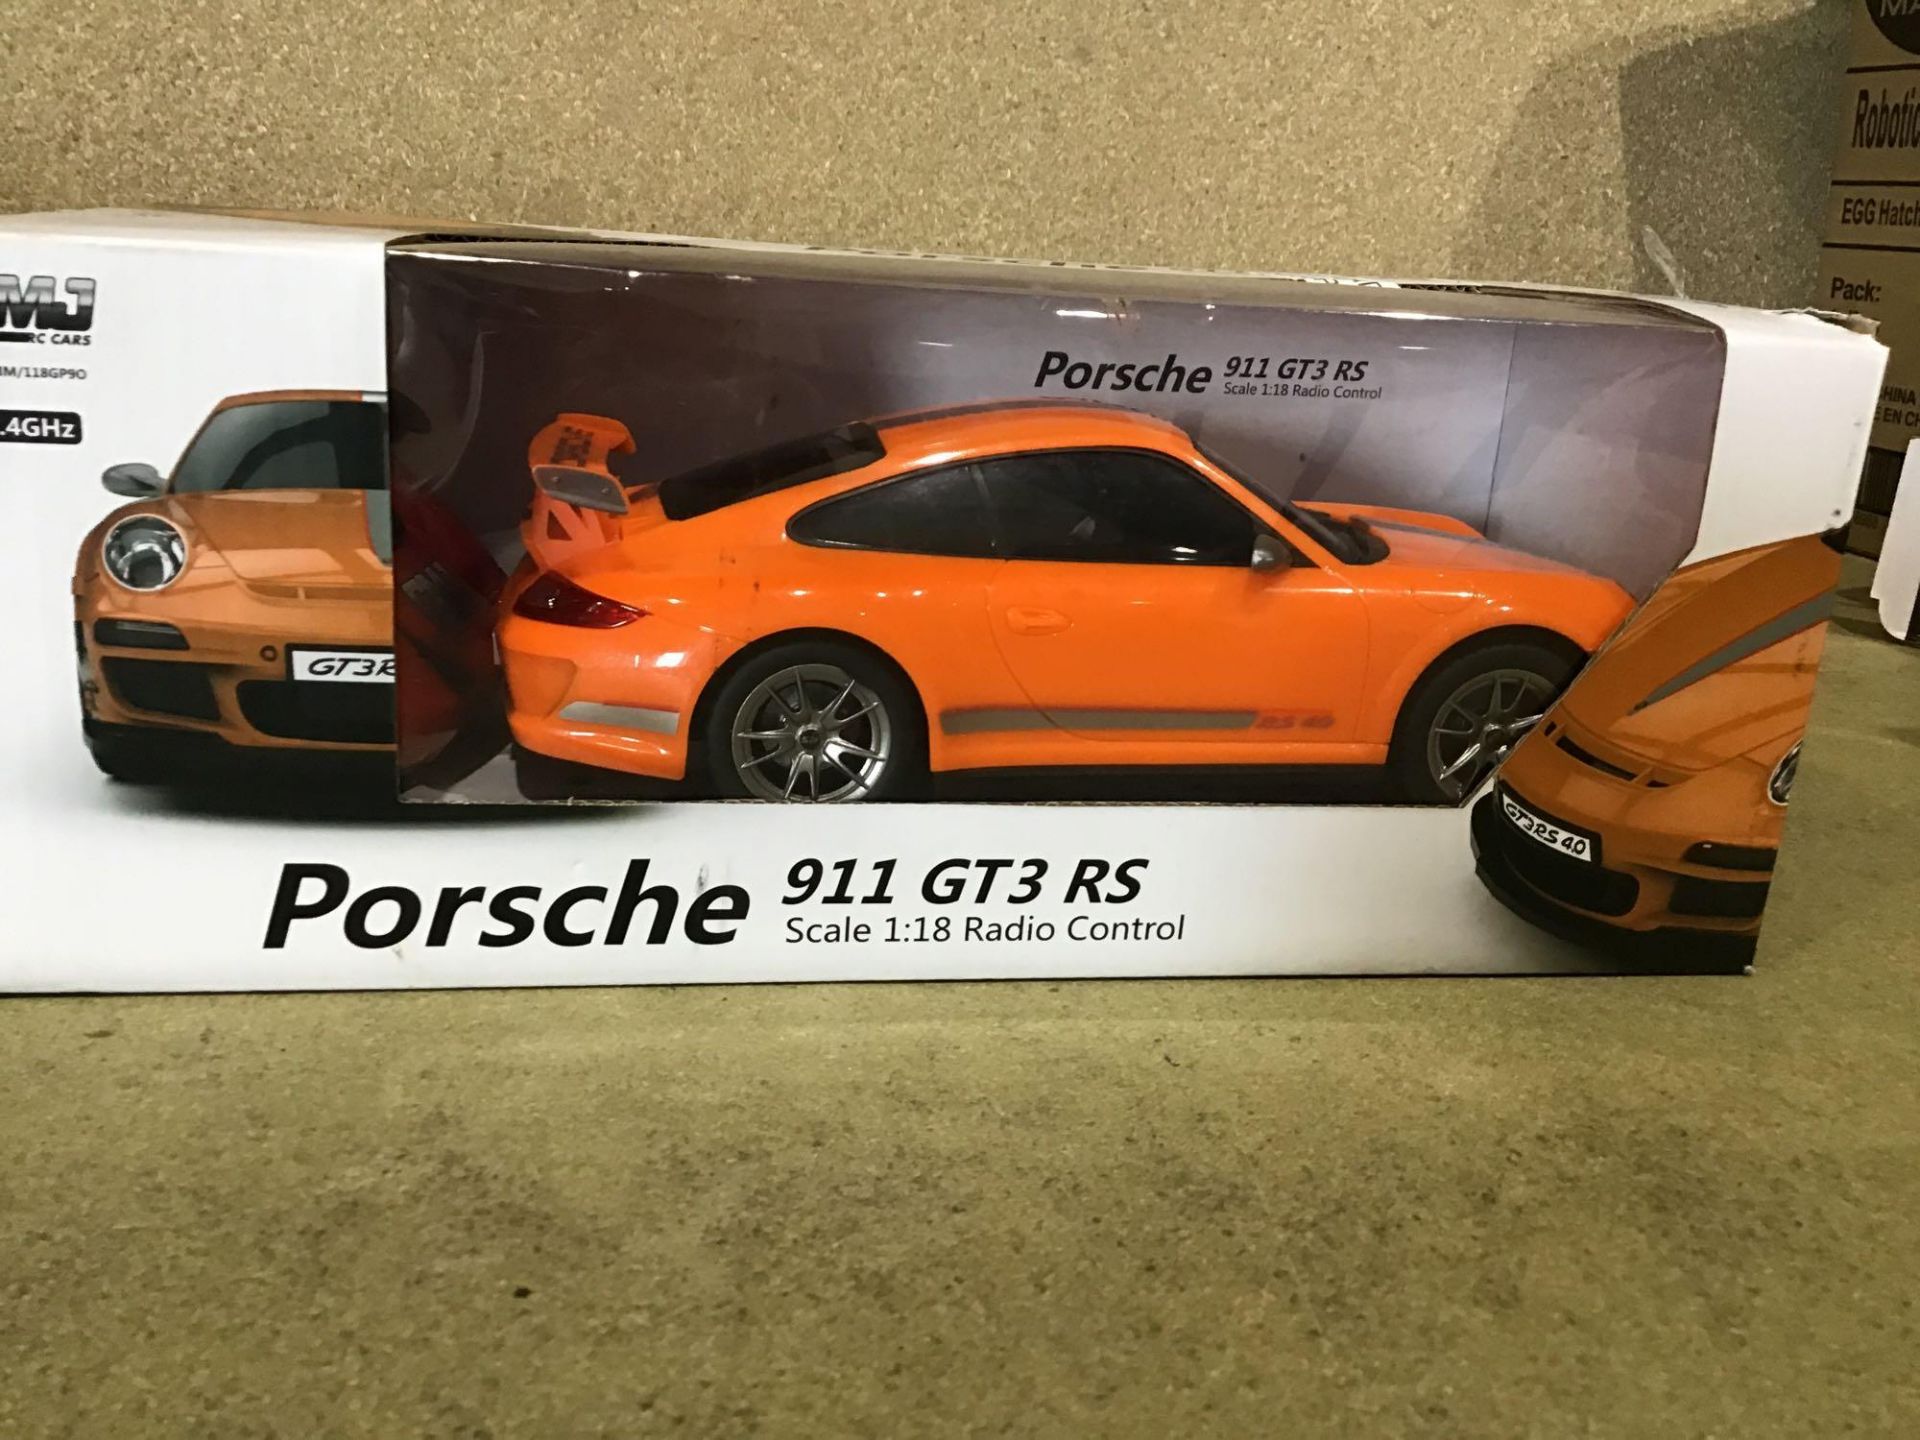 Radio Controlled Porsche 911 Scale 1:18 - Orange 2.4GHZ - £6.50 RRP